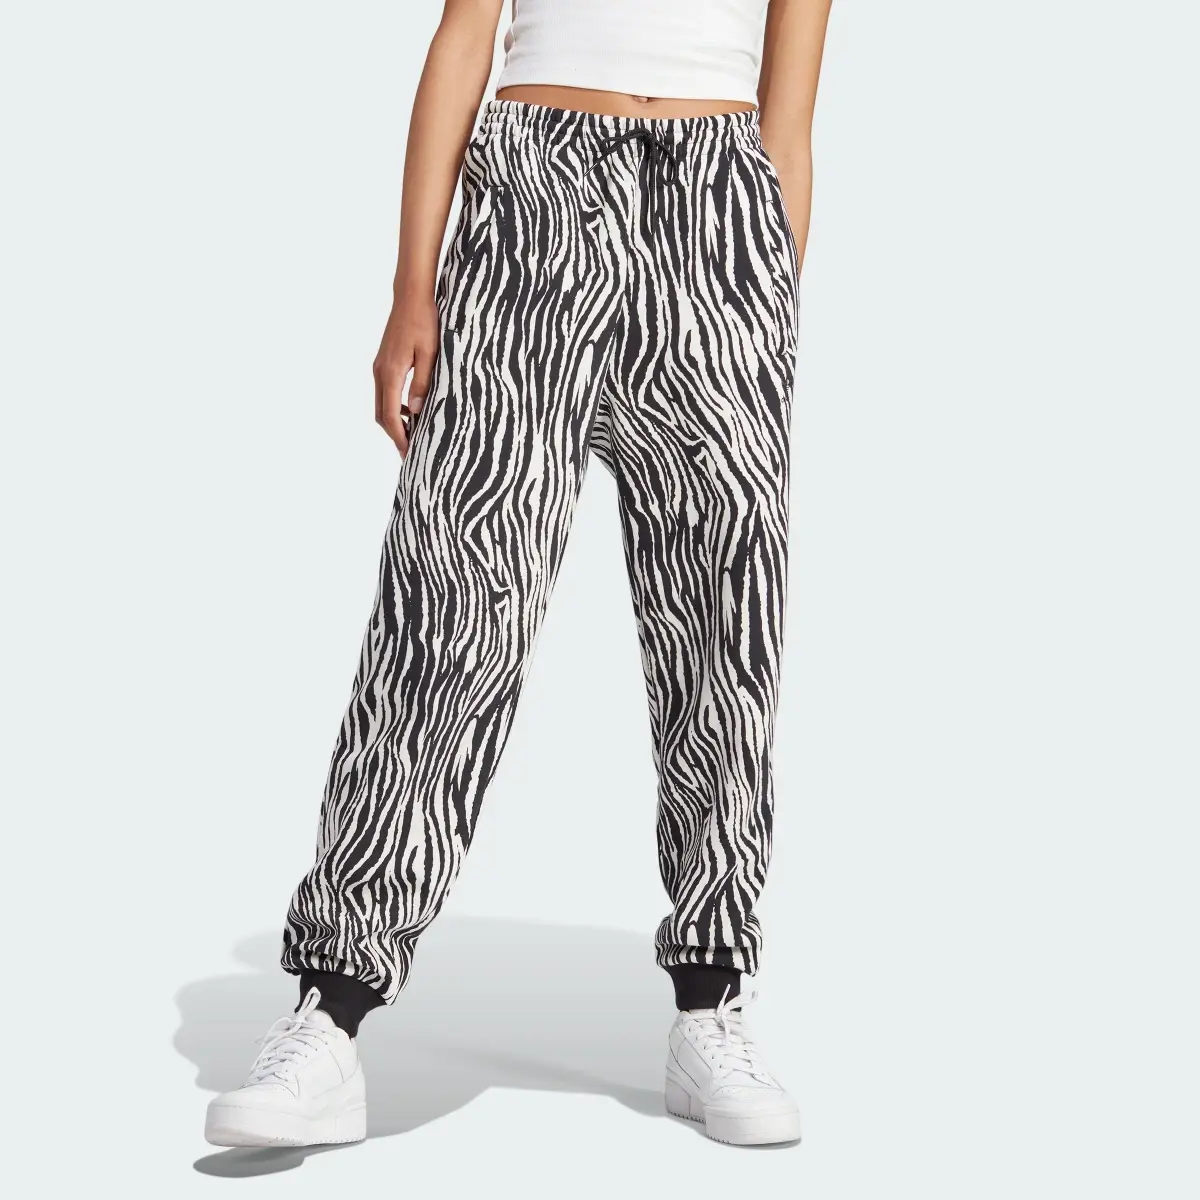 Adidas Spodnie dresowe Allover Zebra Animal Print Essentials. 1